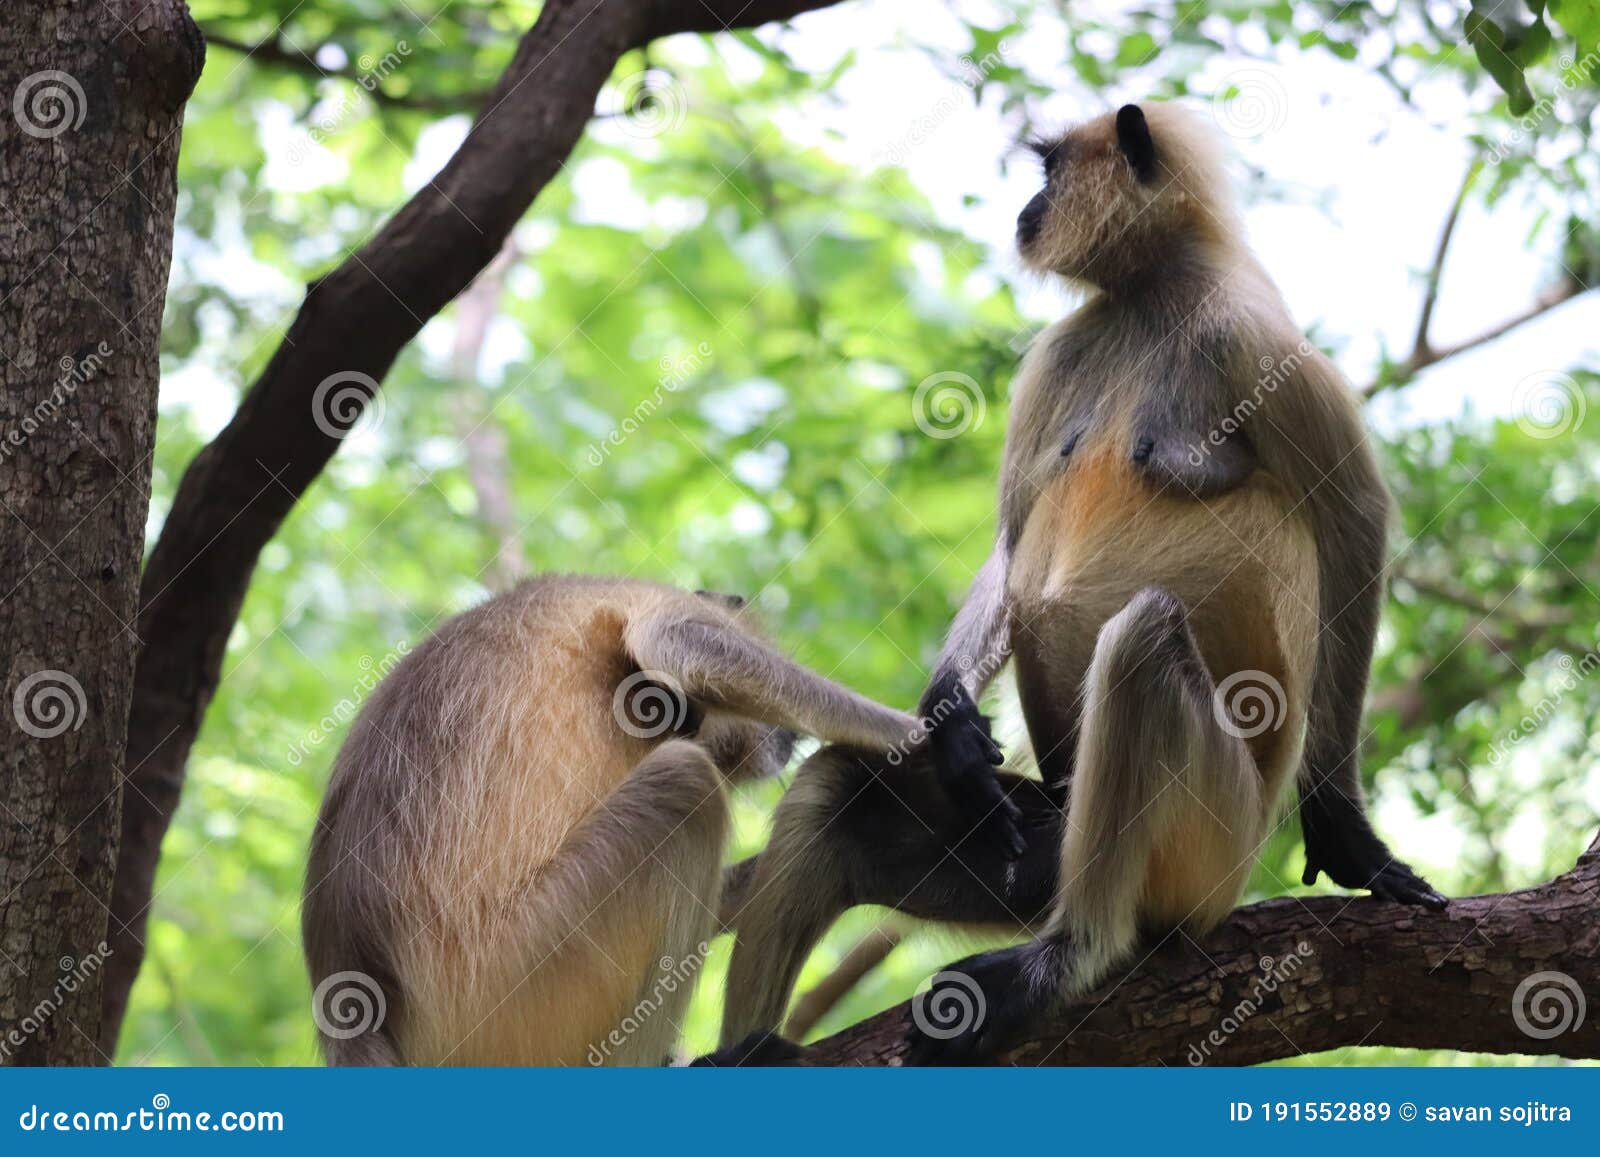 monkey mating with dog